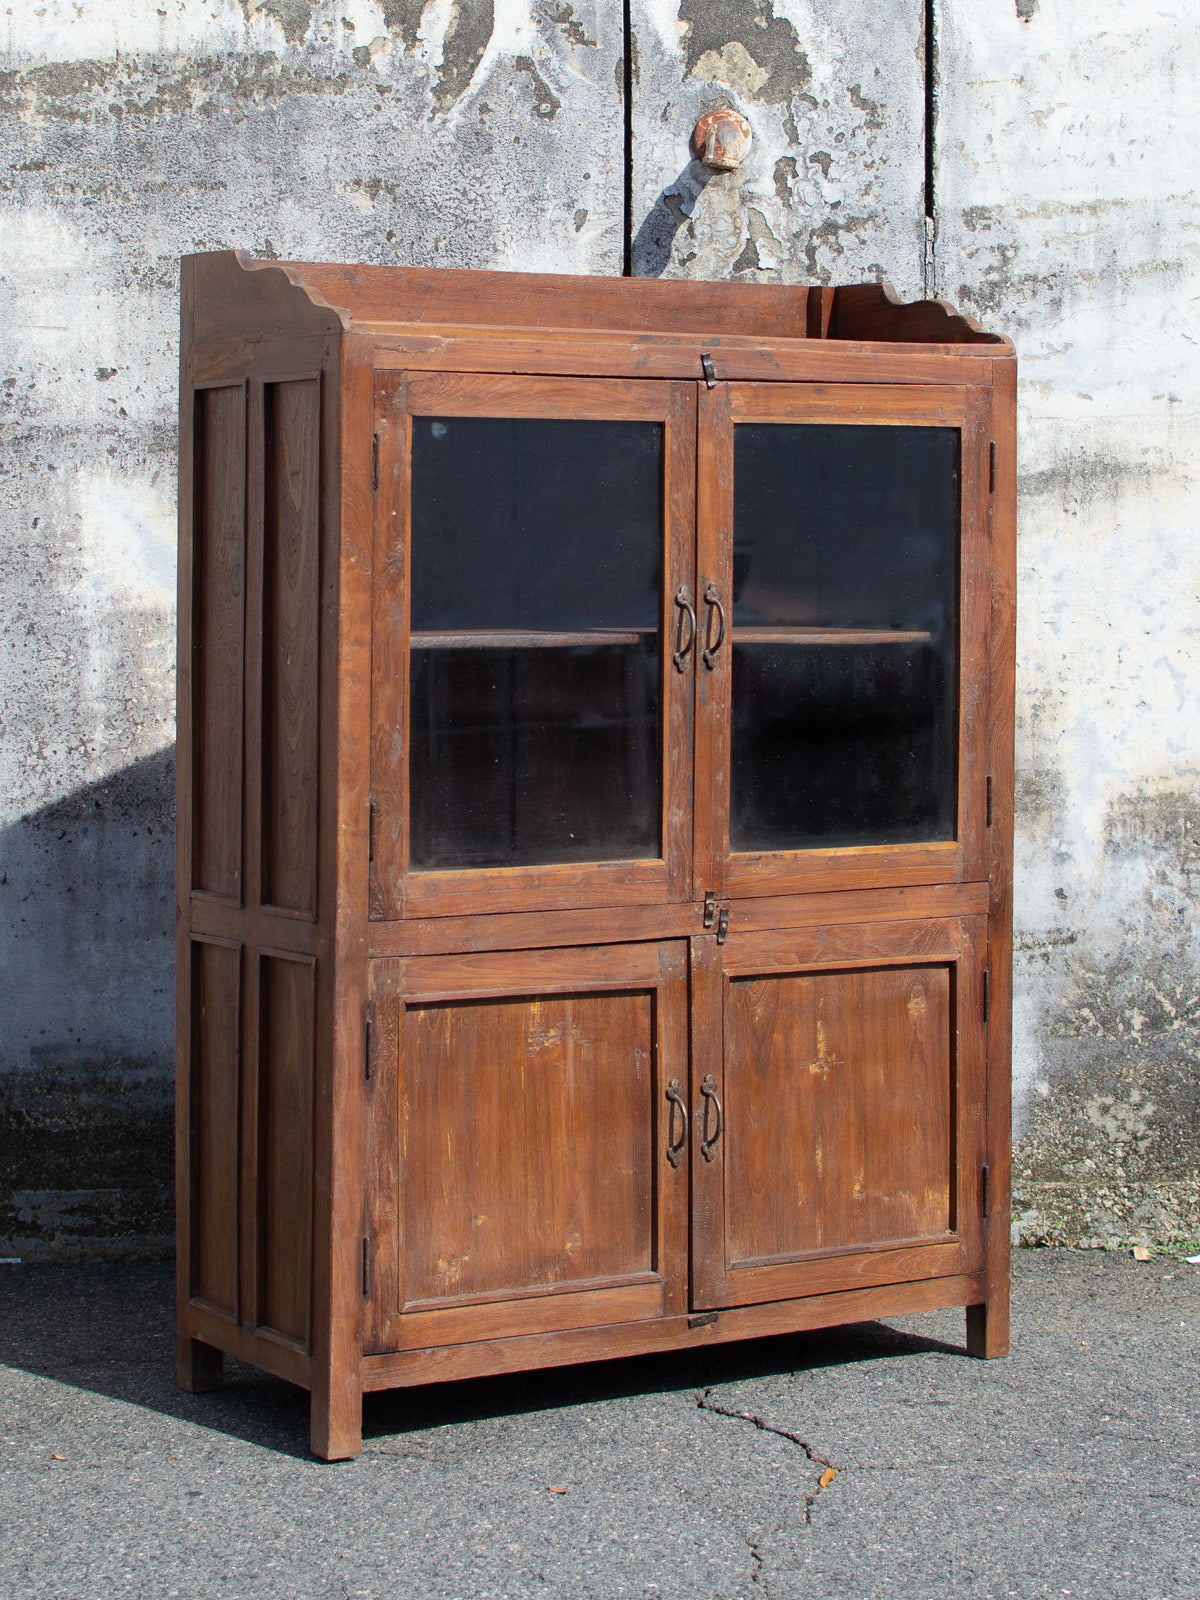 Antique Large Natural Wooden Cabinet